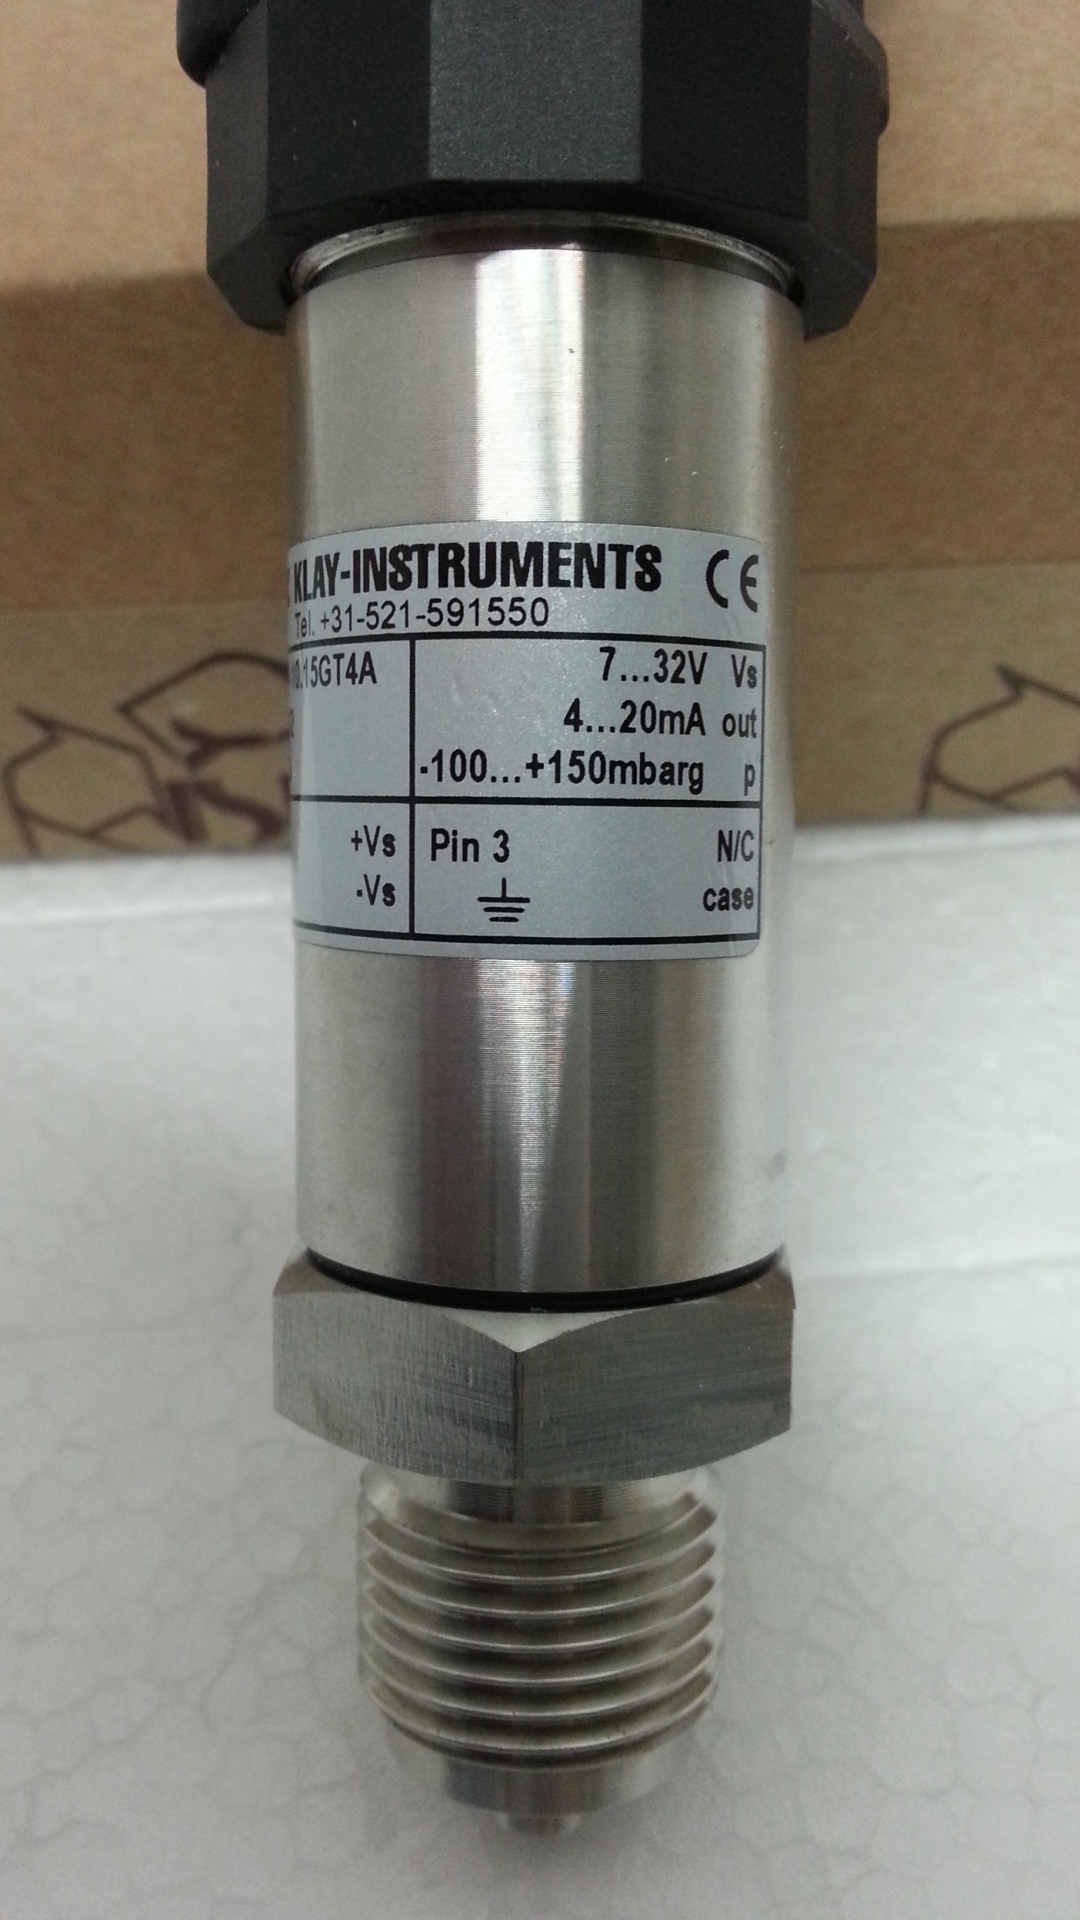 CER-10.15GT4A klay instruments pressure sensor